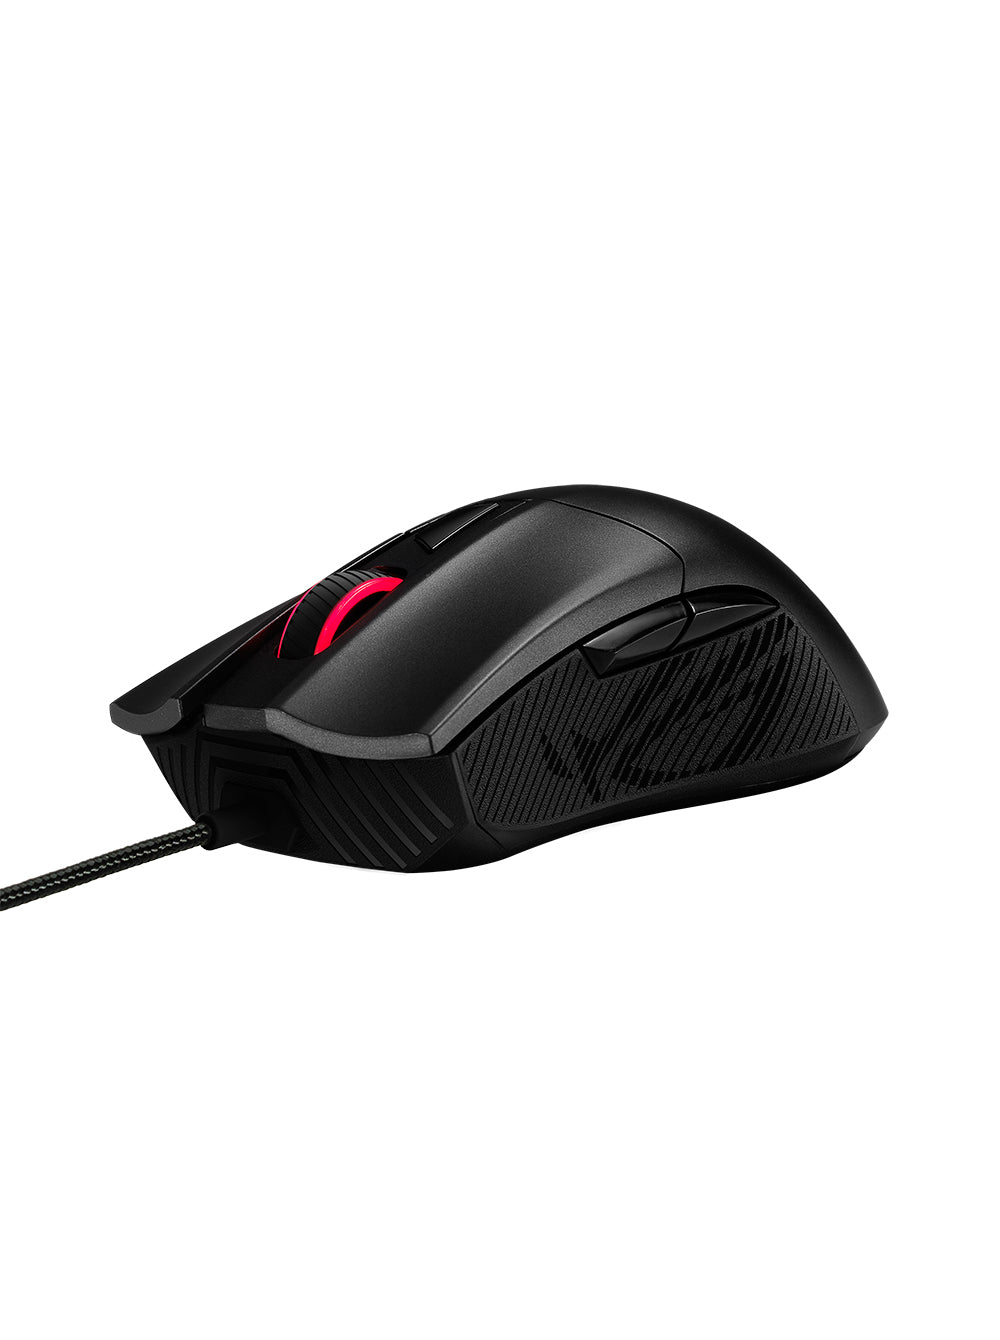 ASUS ROG GLADIUS II Core Gaming Mouse